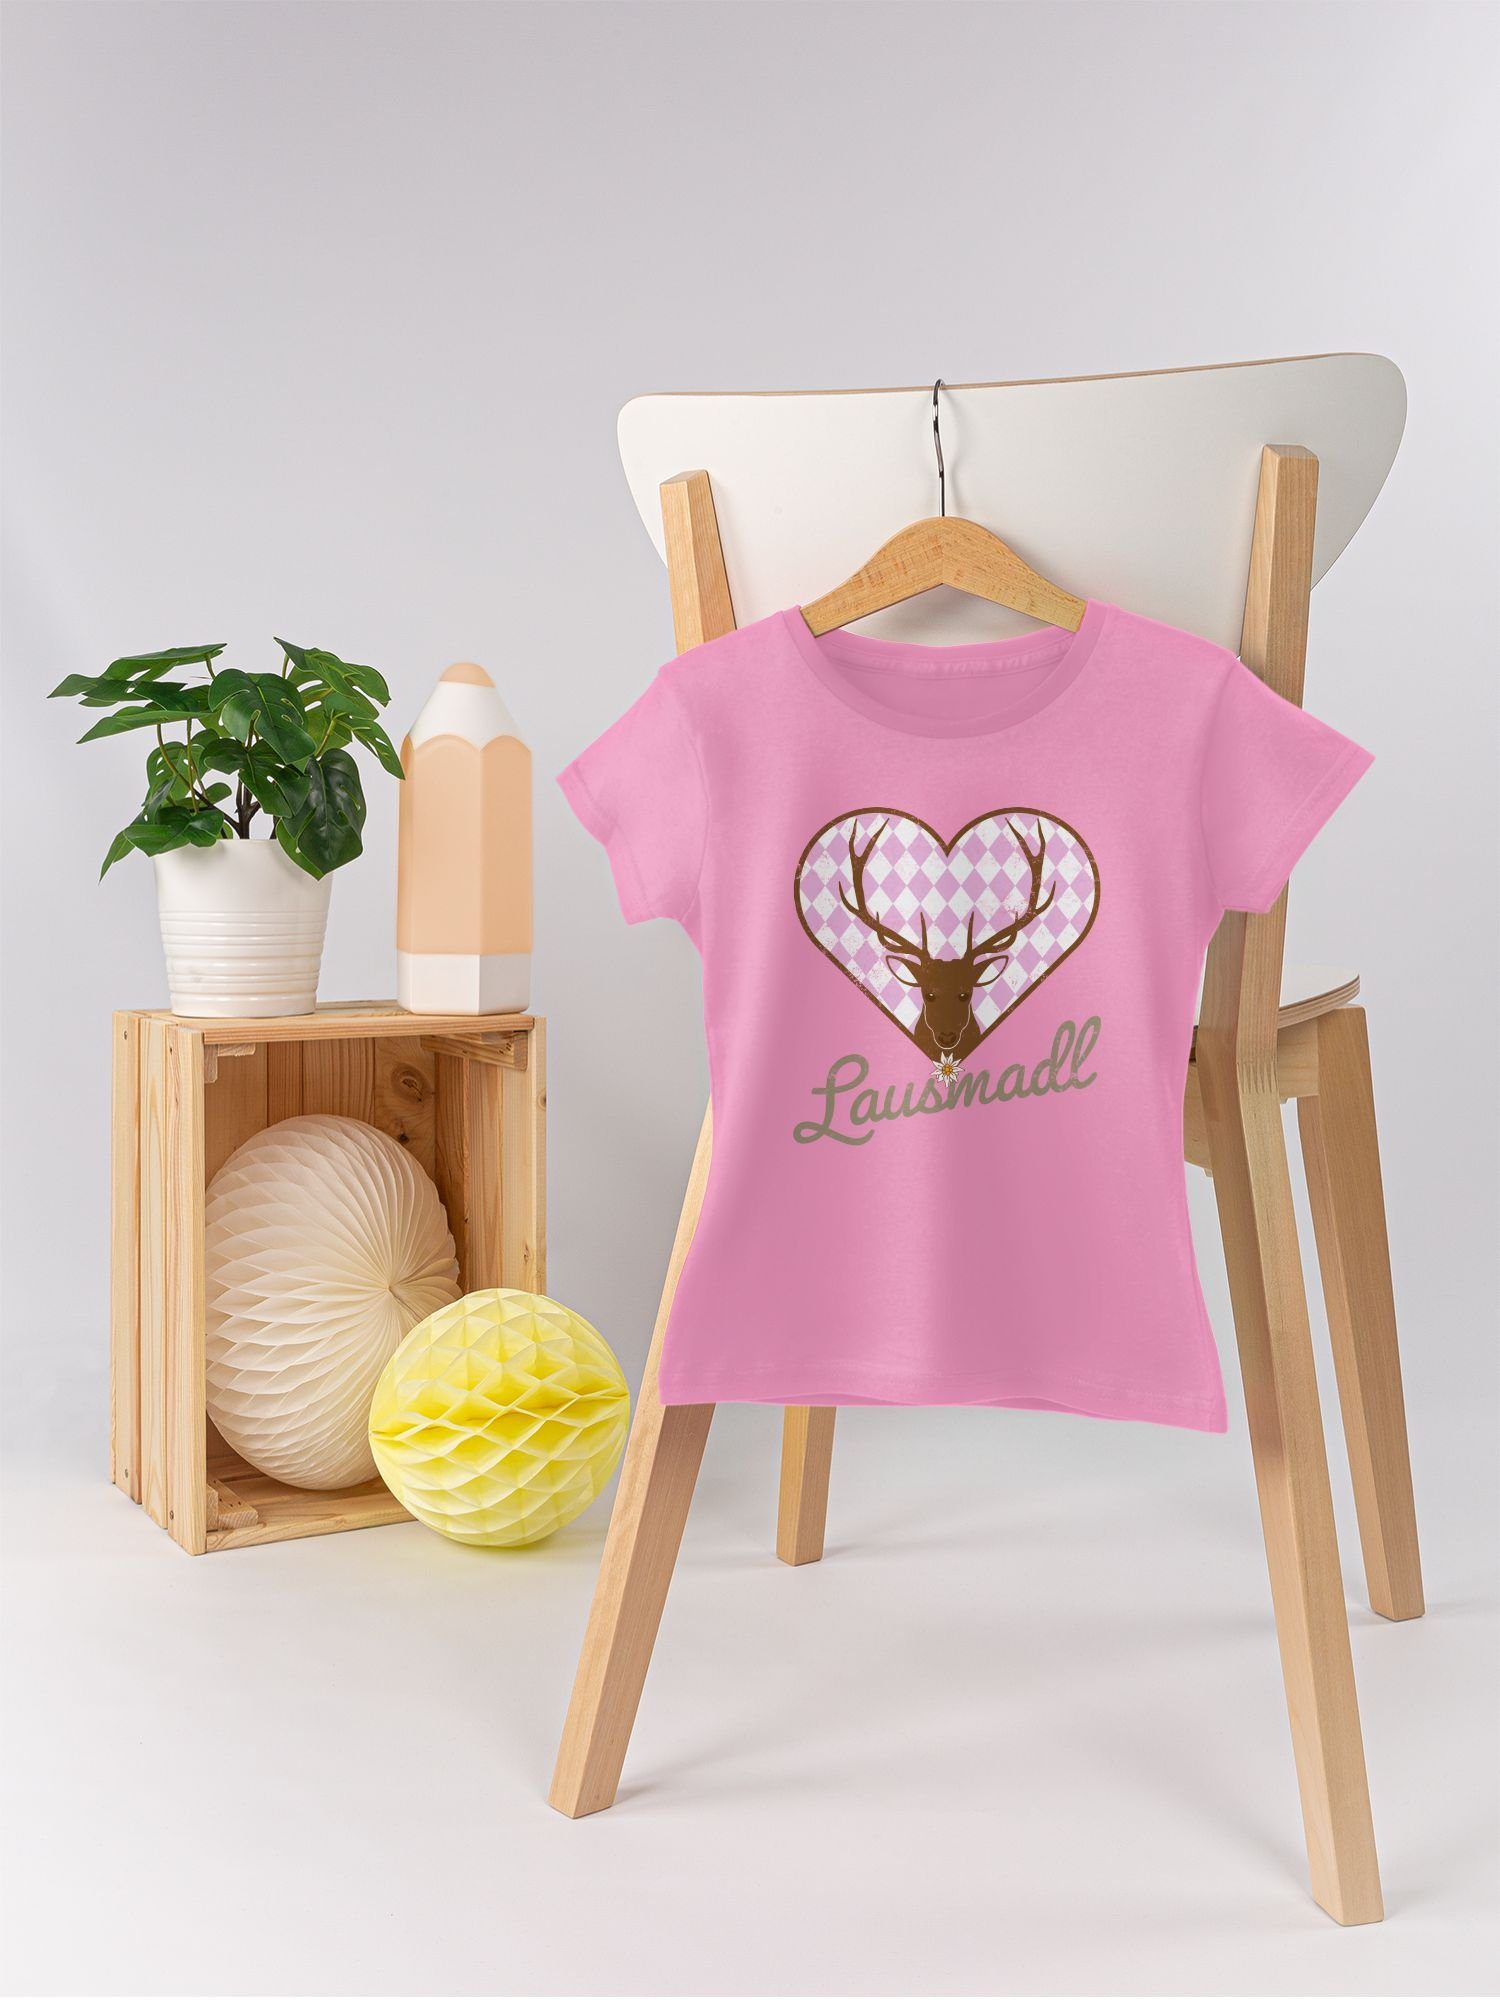 Shirtracer T-Shirt Lausmadl Hirsch Mode Rosa Kinder 2 Outfit für Oktoberfest